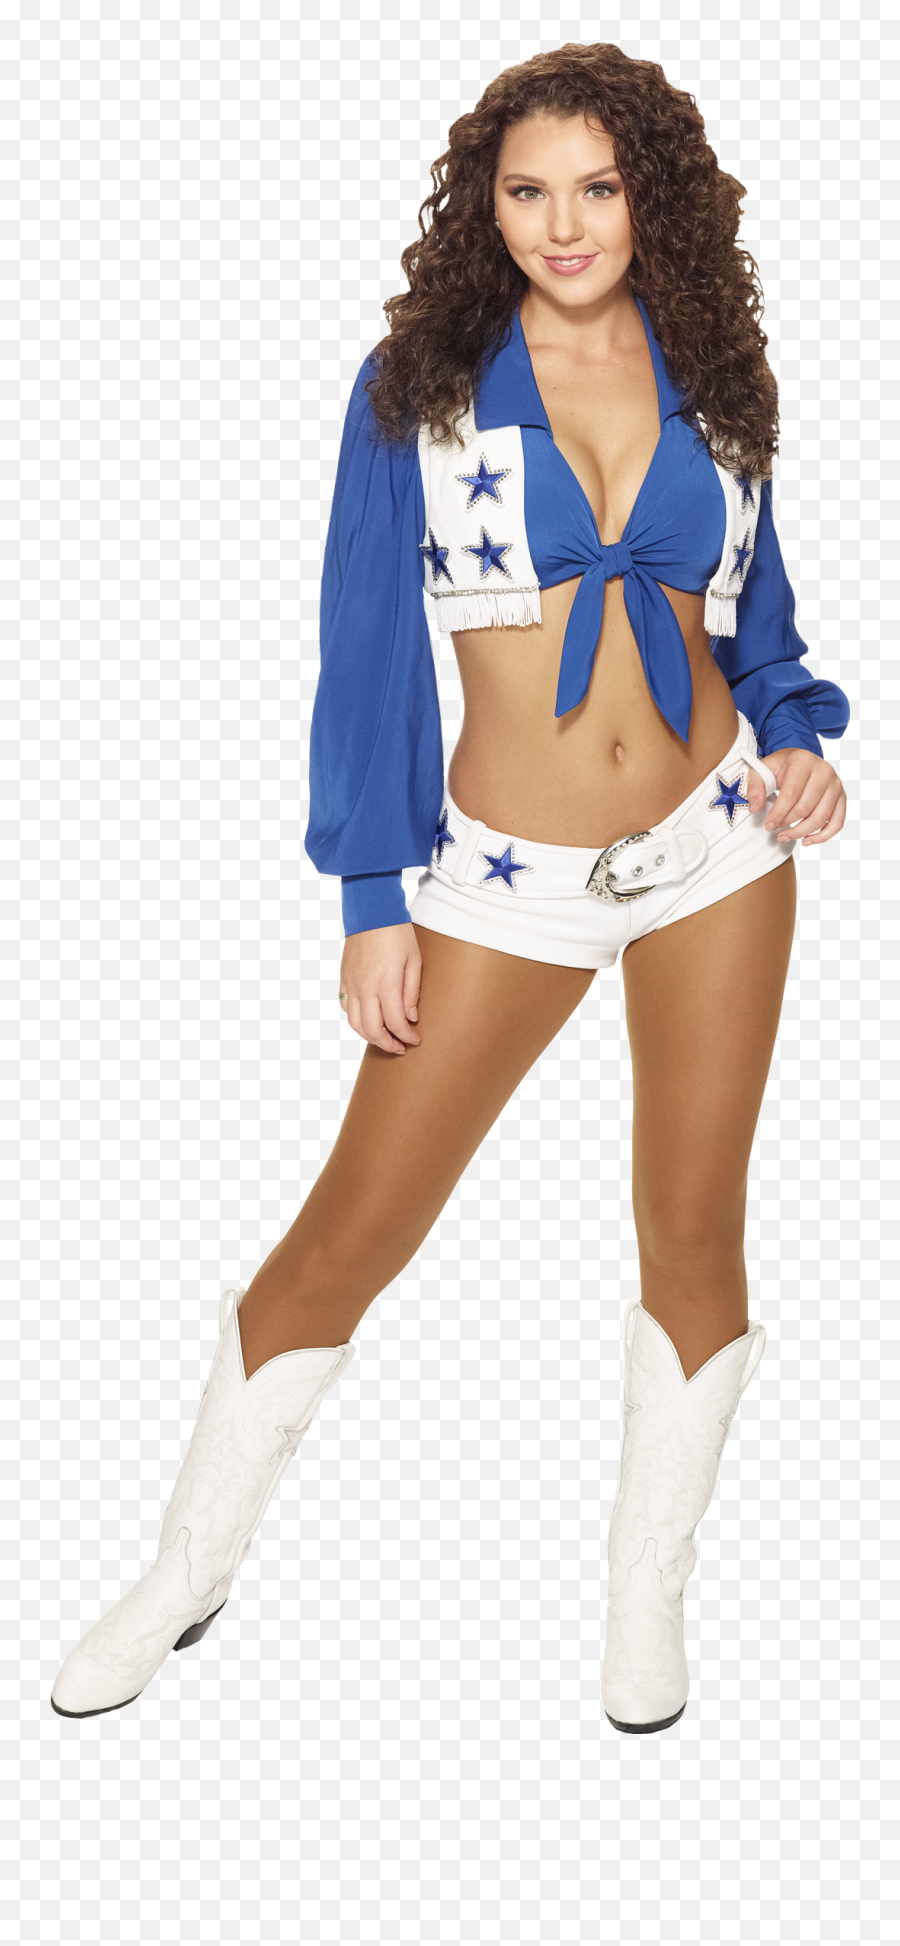 Maddie S11 Rookie Dallas Cowboys Cheerleaders Making Emoji,Emoticon Cheerling Moving